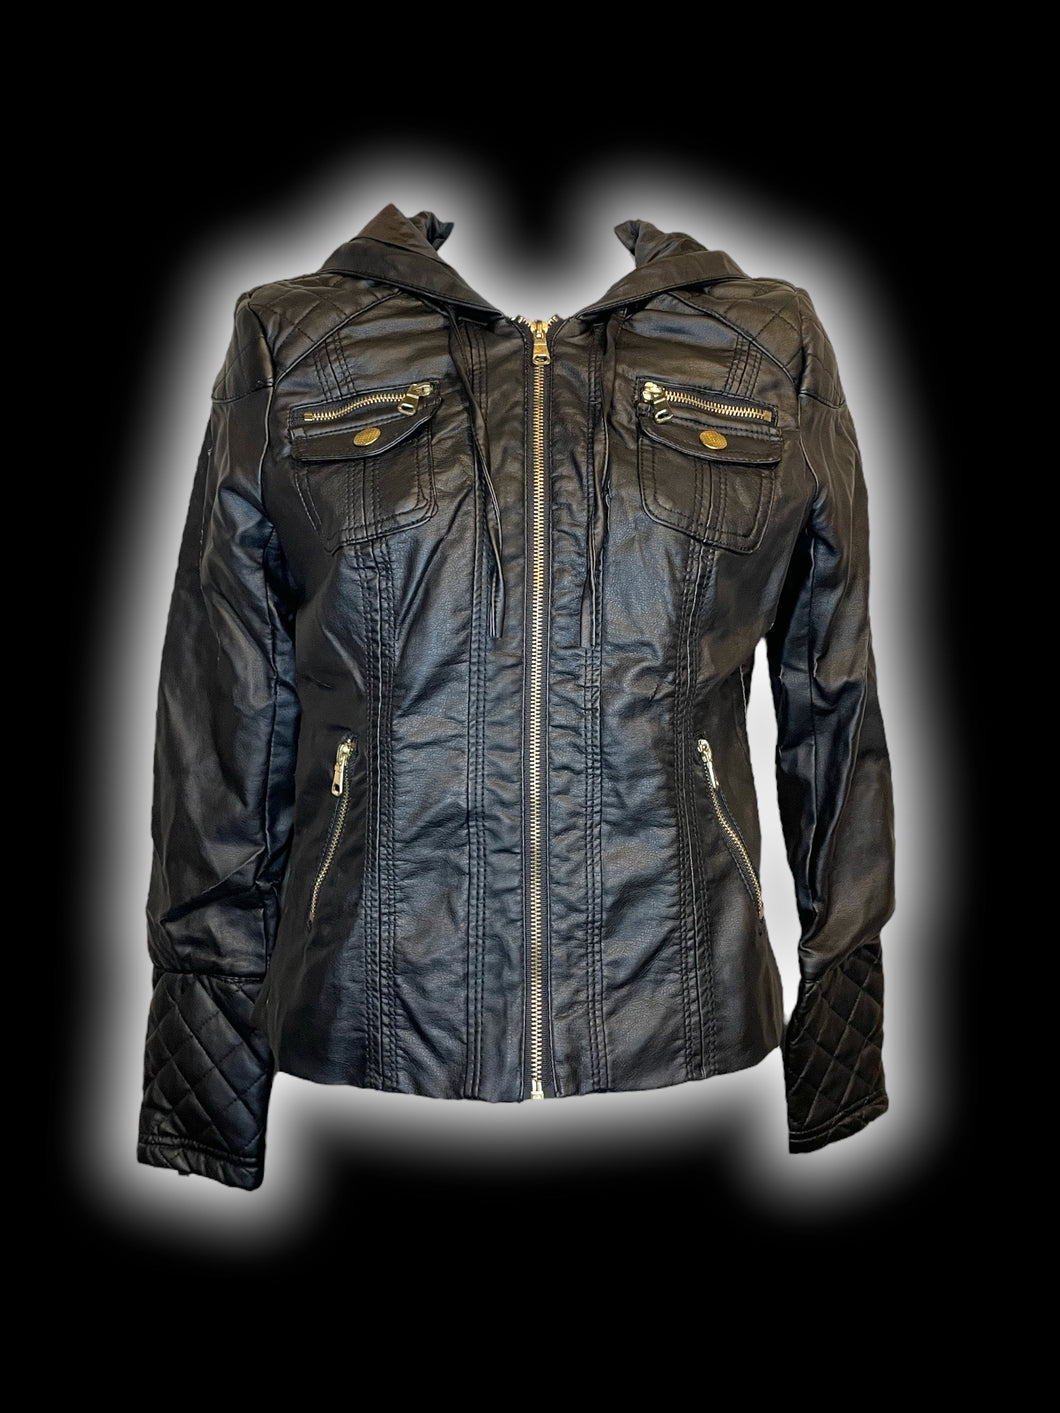 M Black pleather zip-up jacket w/ pockets, zipper details, hood, & quilted pattern detail